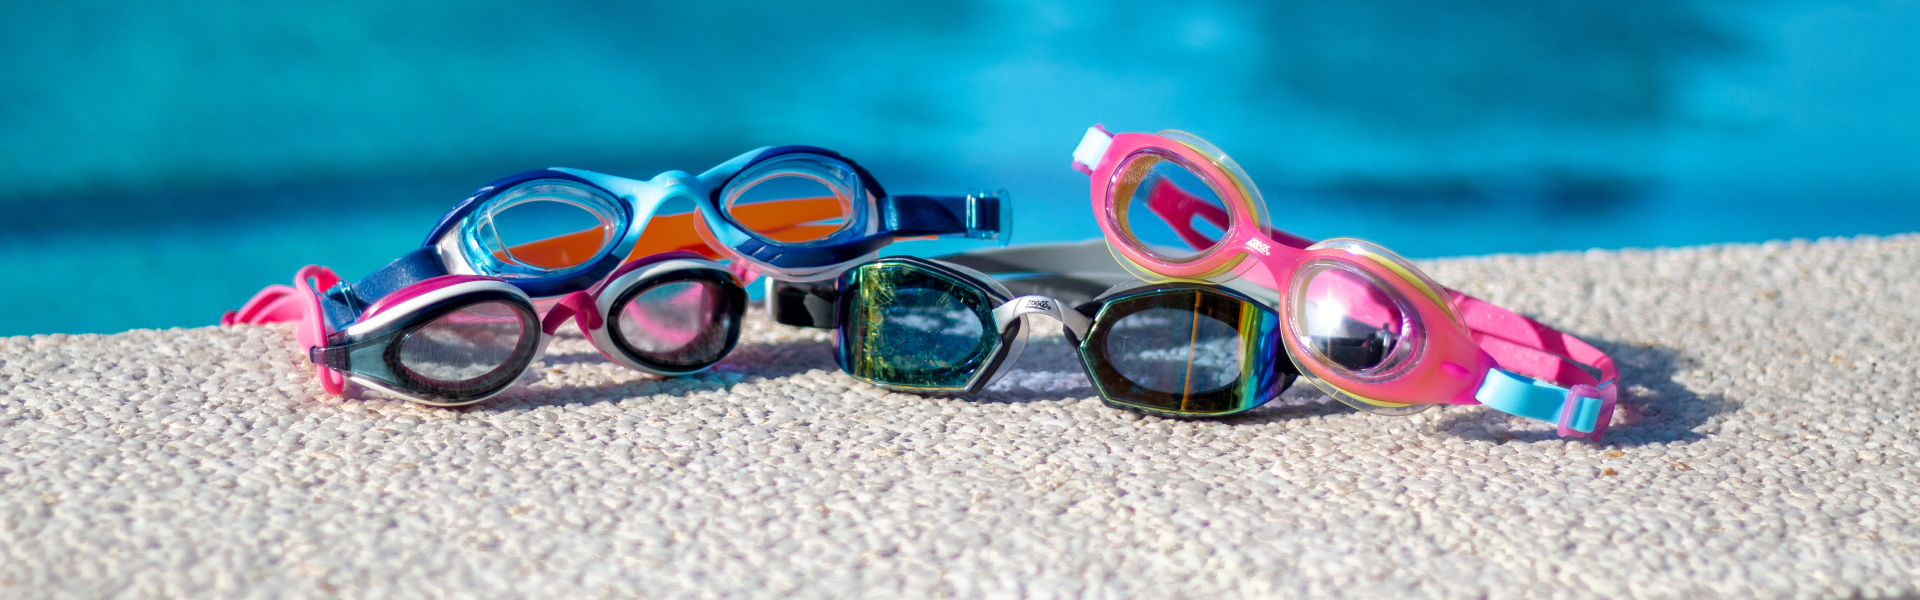 Product Spotlight: Zoggs Tri-vision Jr goggles